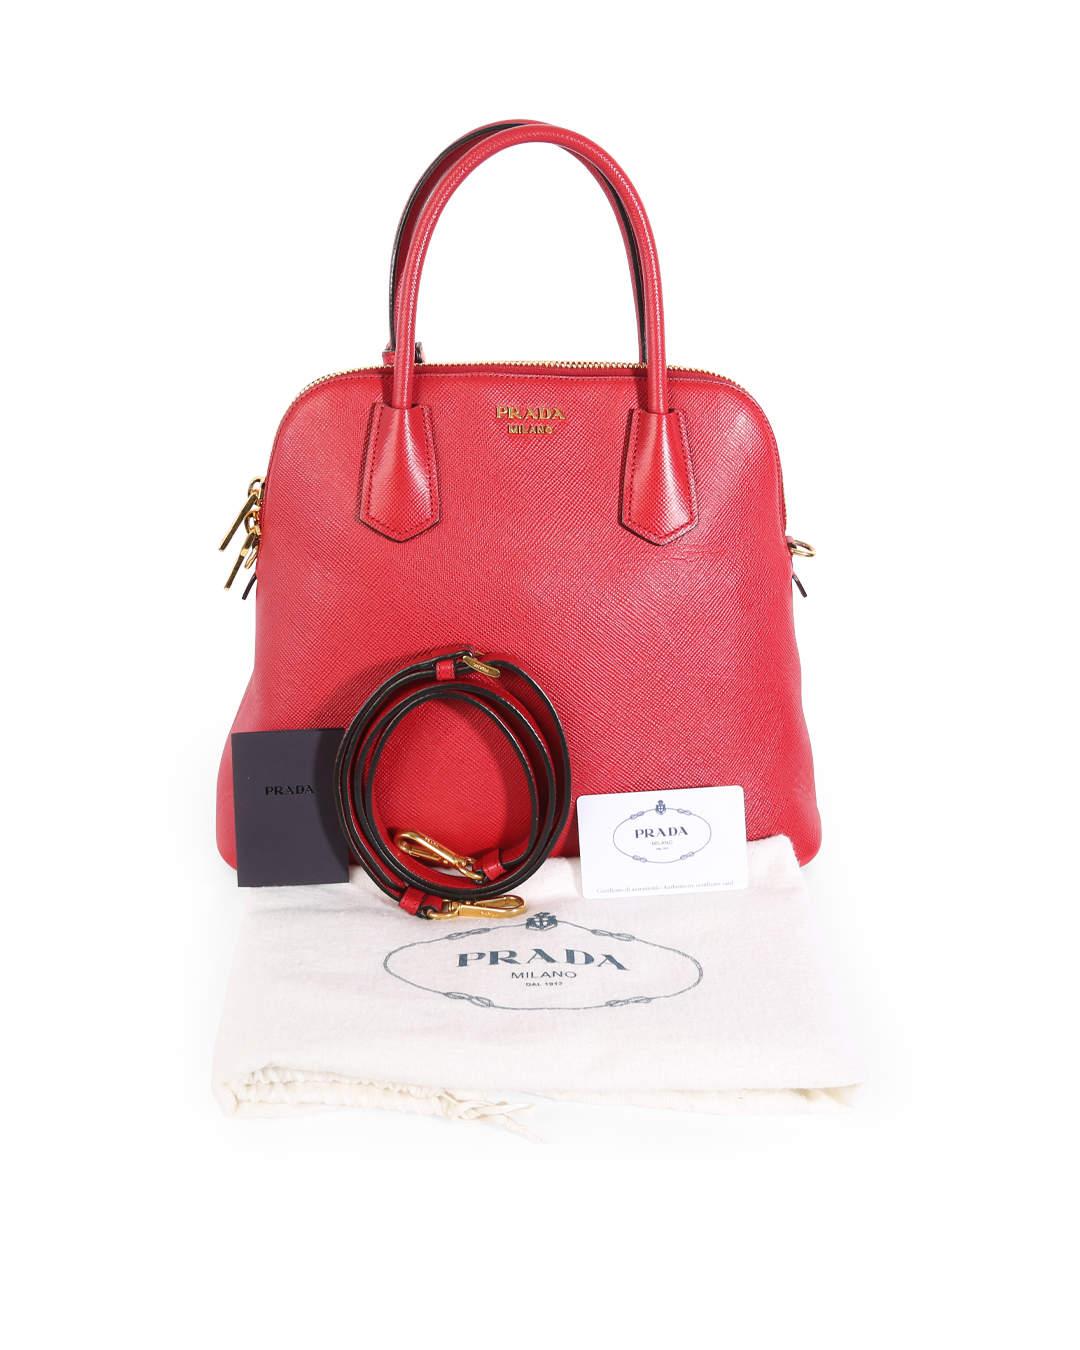 Prada Red Saffiano Leather Medium Dome Satchel Bag For Sale 4